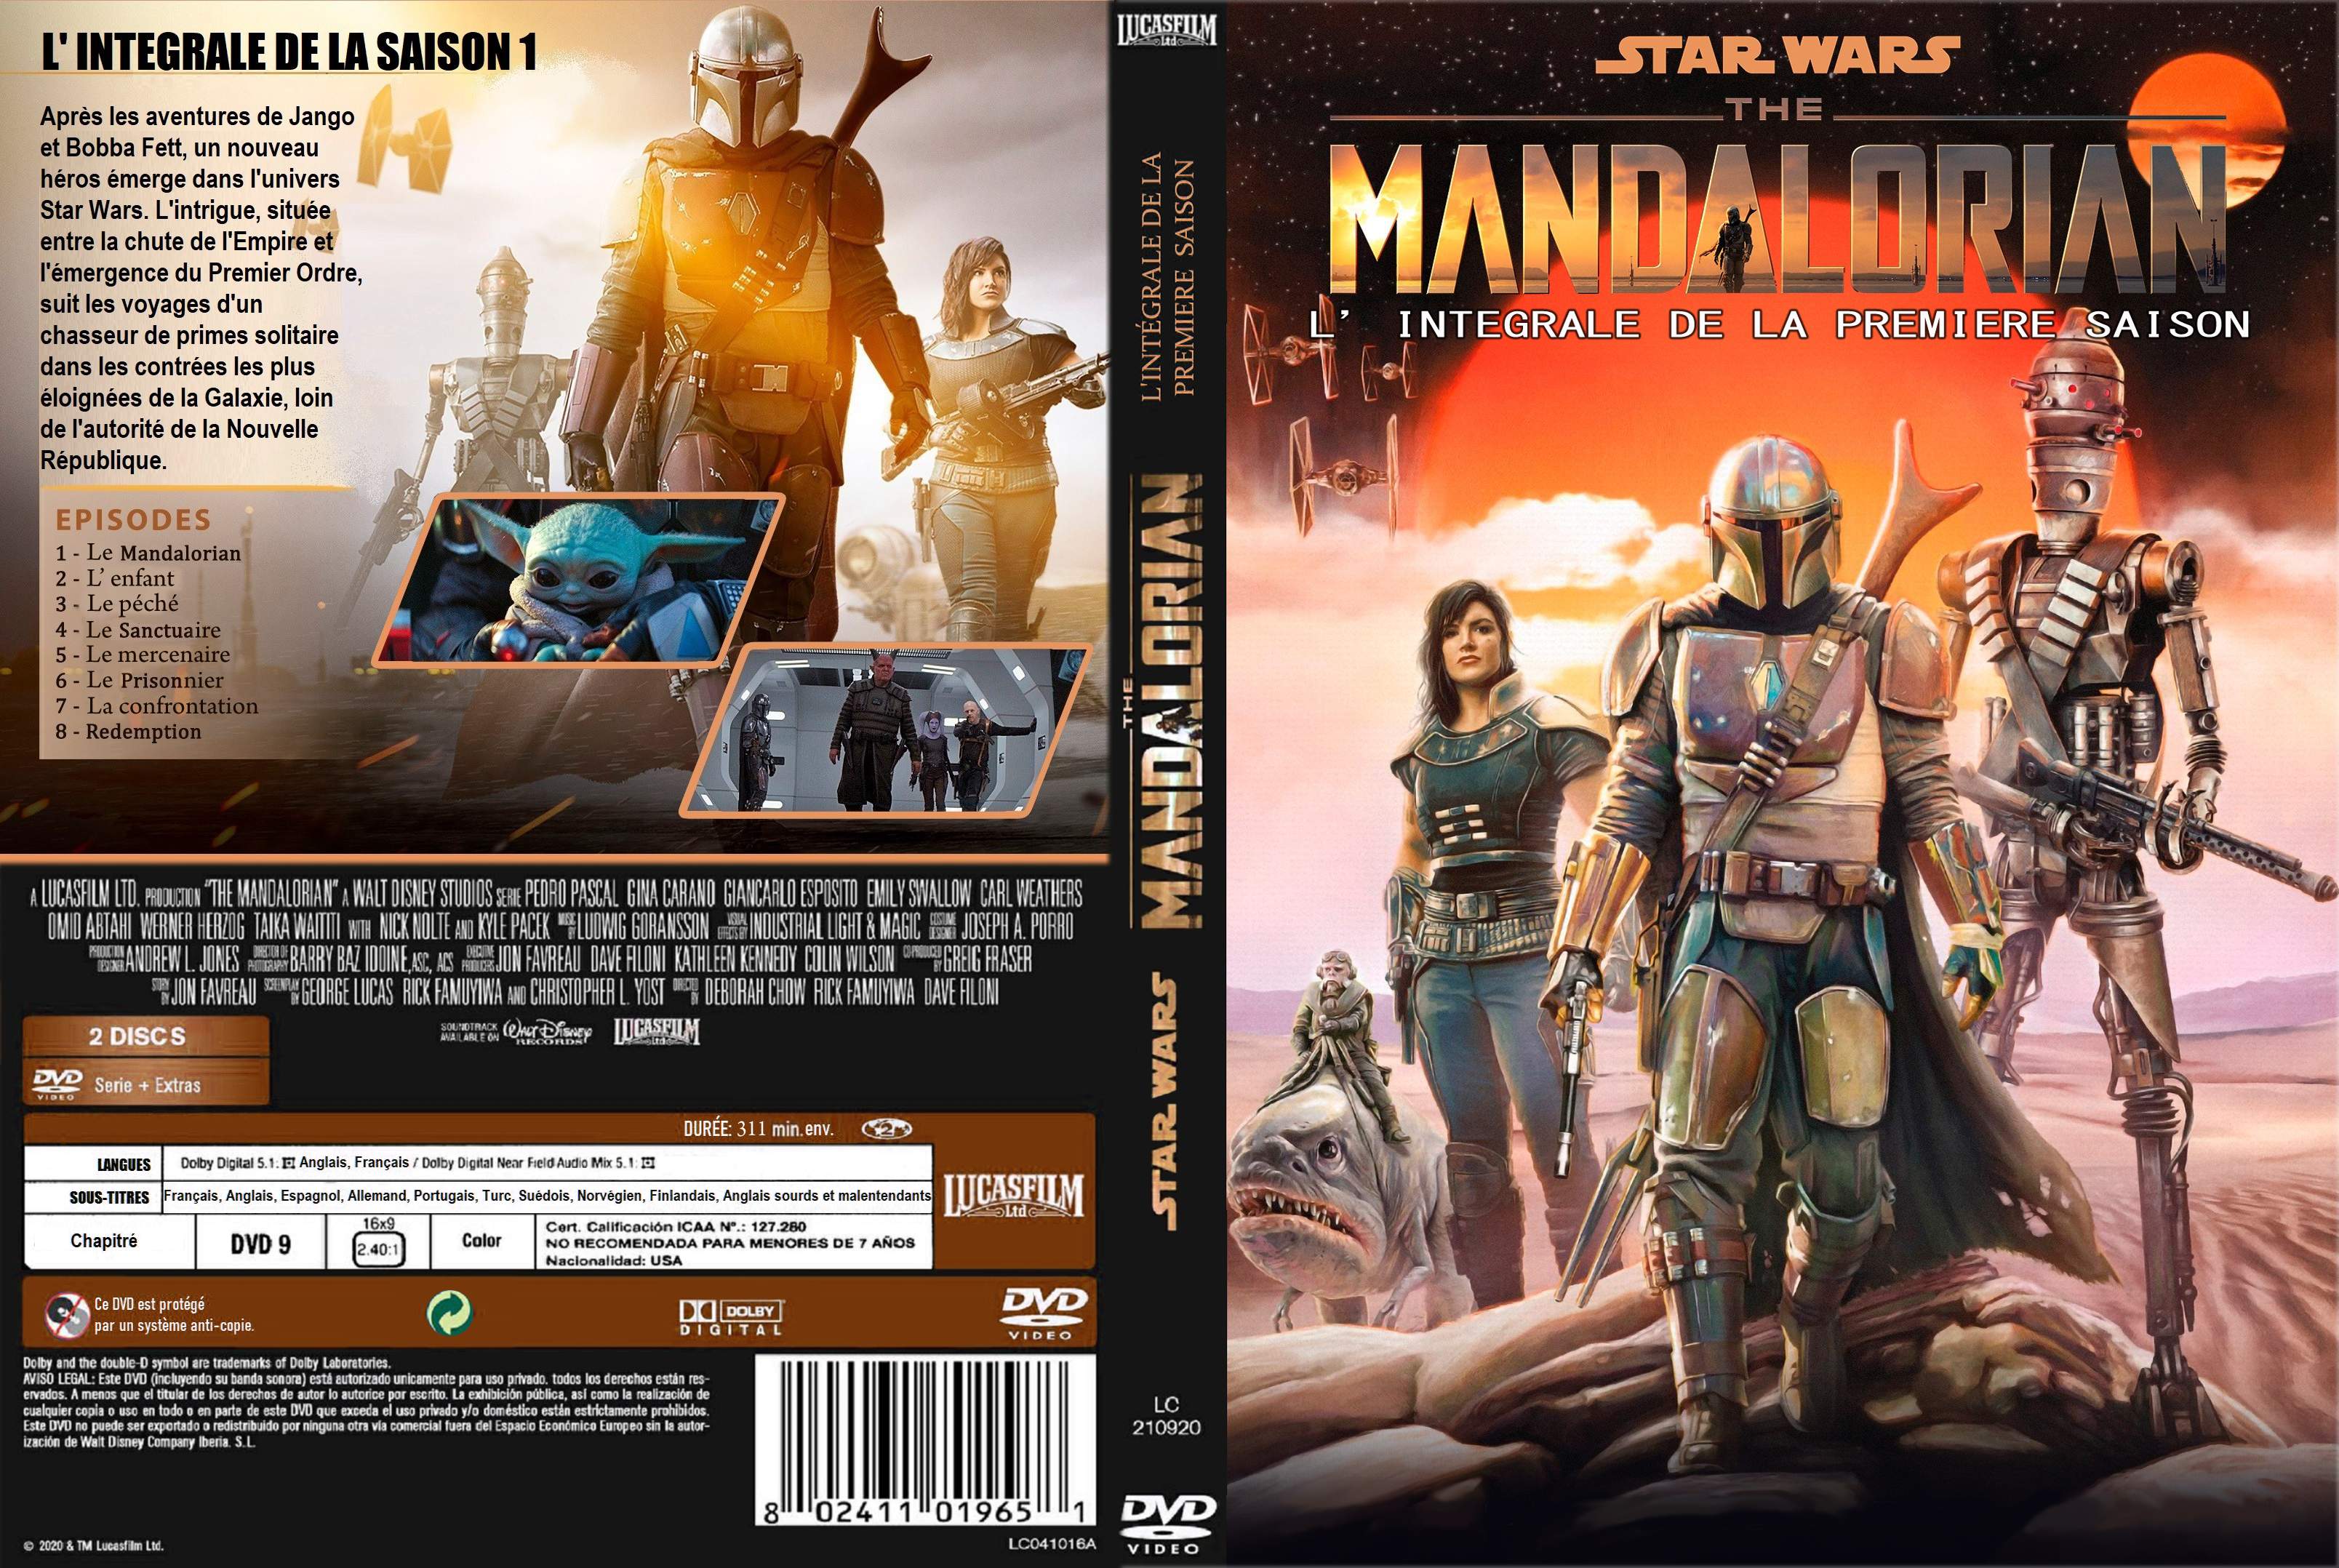 Jaquette DVD The Mandalorian Saison 1 custom v3